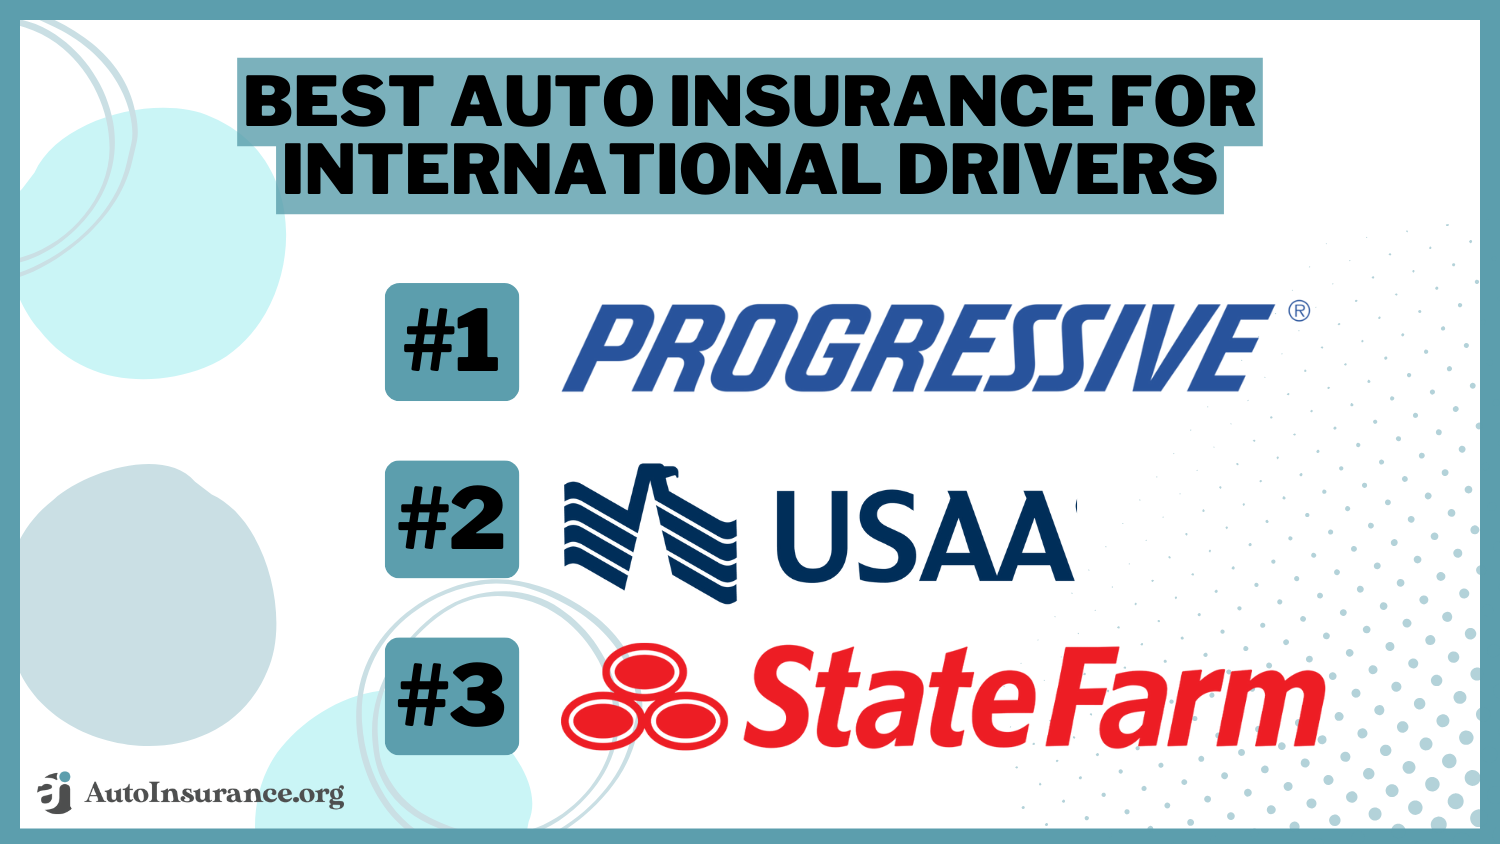 Best Auto Insurance for International Drivers: Progressive, USAA, State Farm